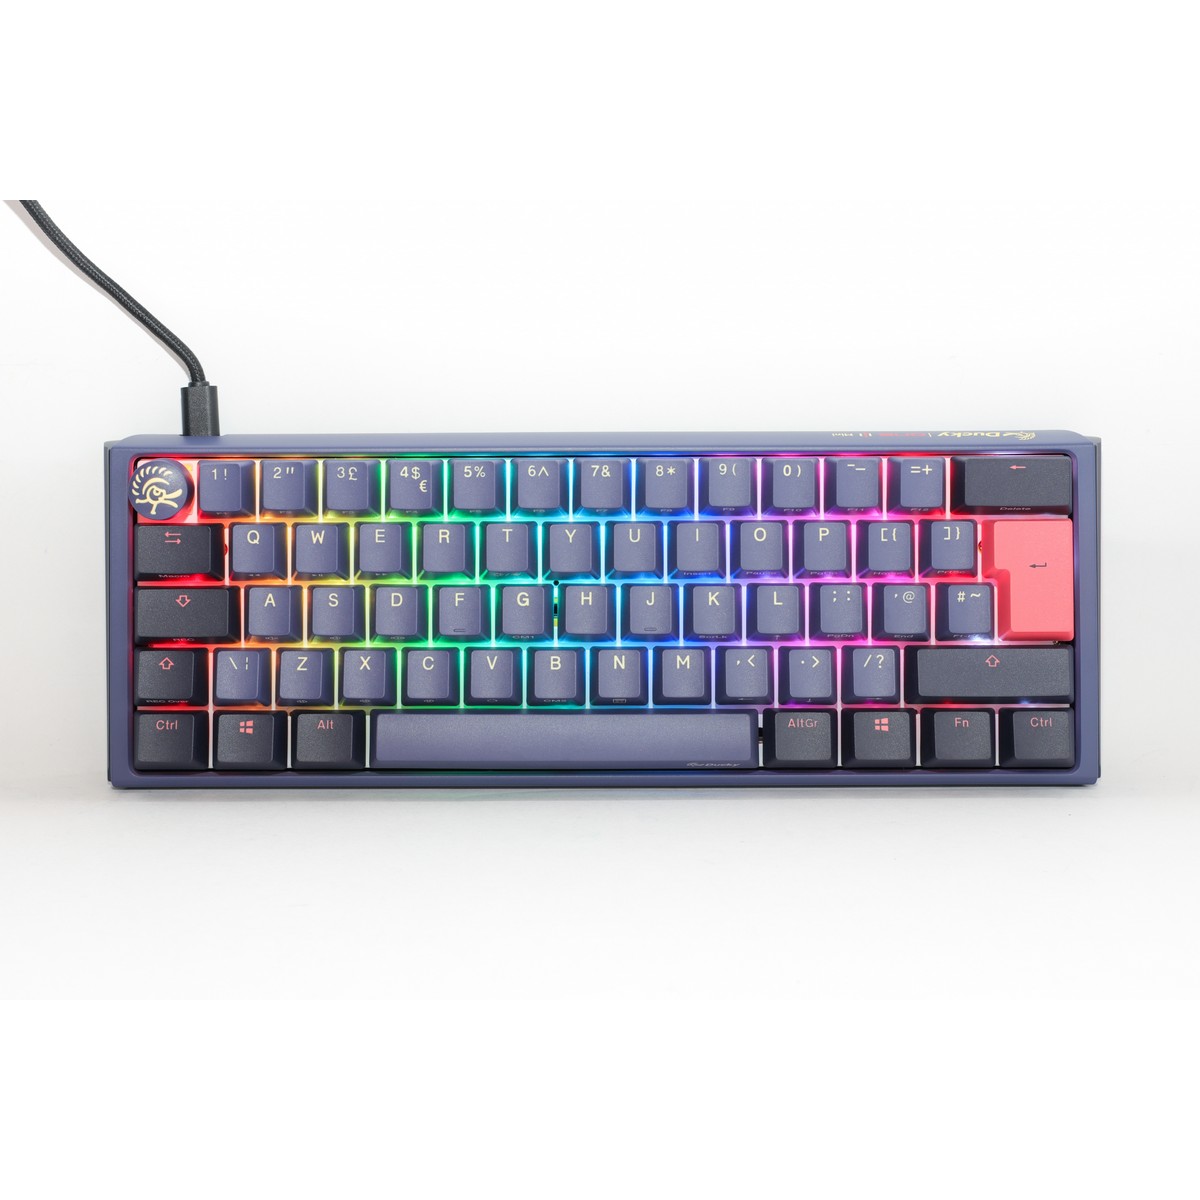 Ducky One 3 Cosmic Mini 60% USB RGB Mechanical Gaming Keyboard Cherry MX Blue Switch - UK Layout